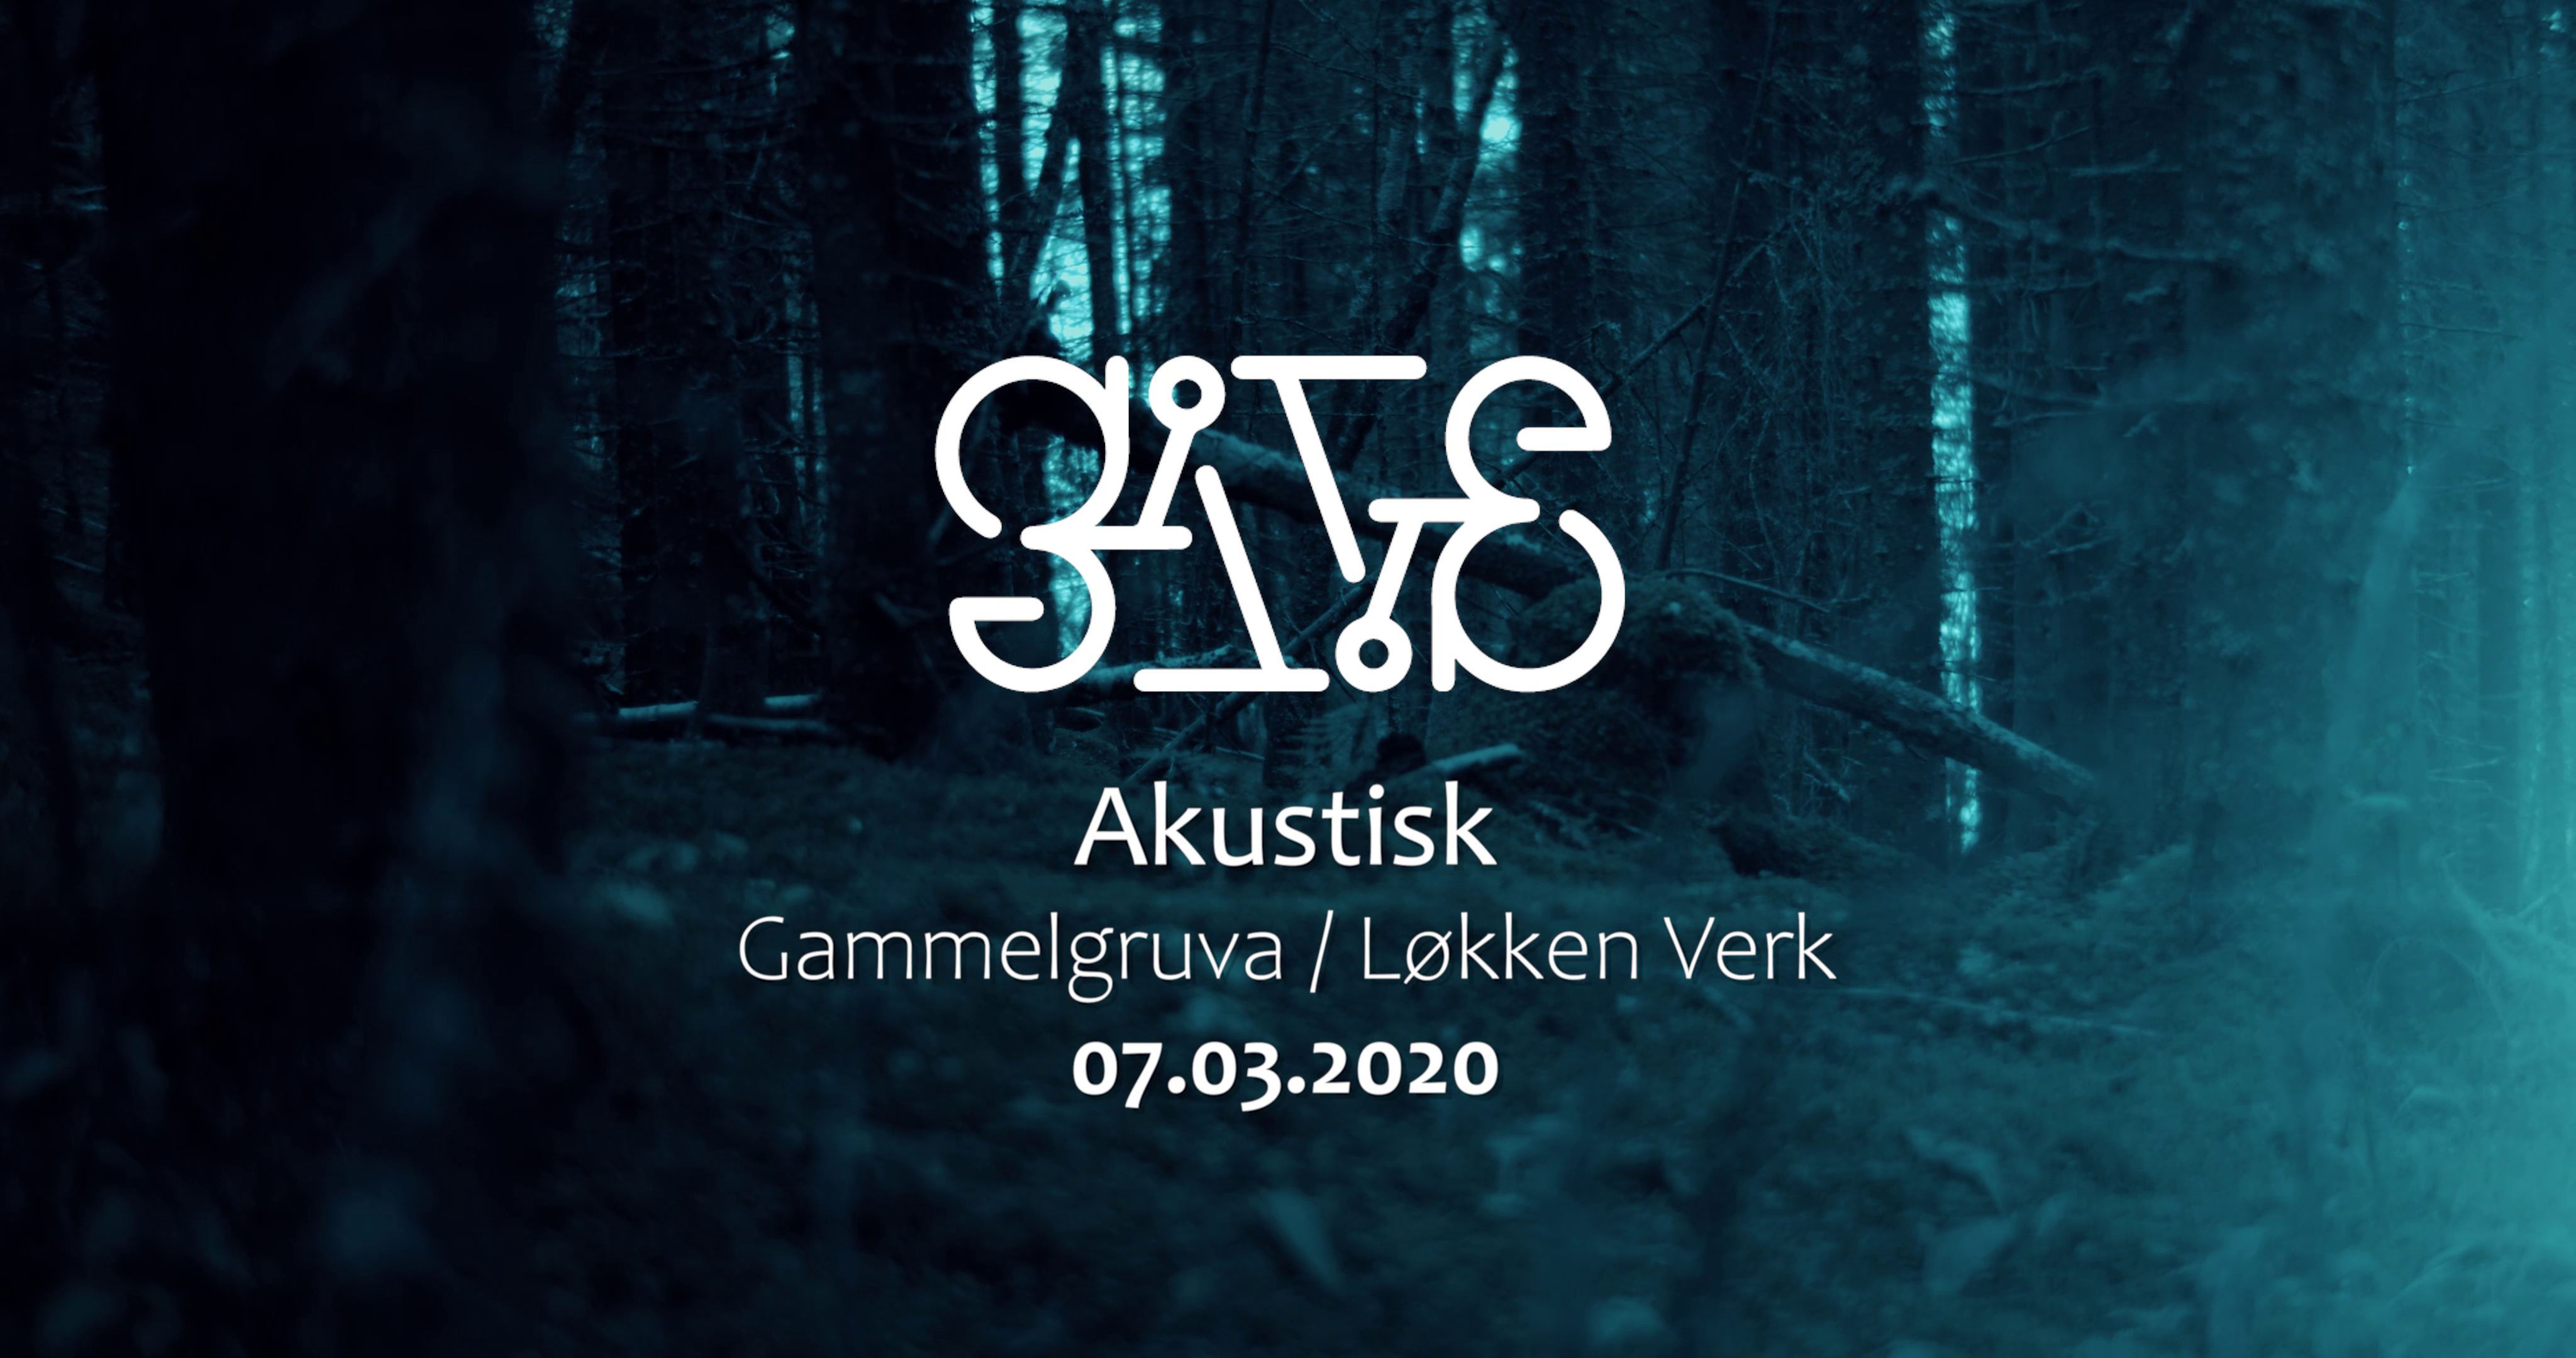 You are currently viewing Gåte Akustisk i Gammelgruva